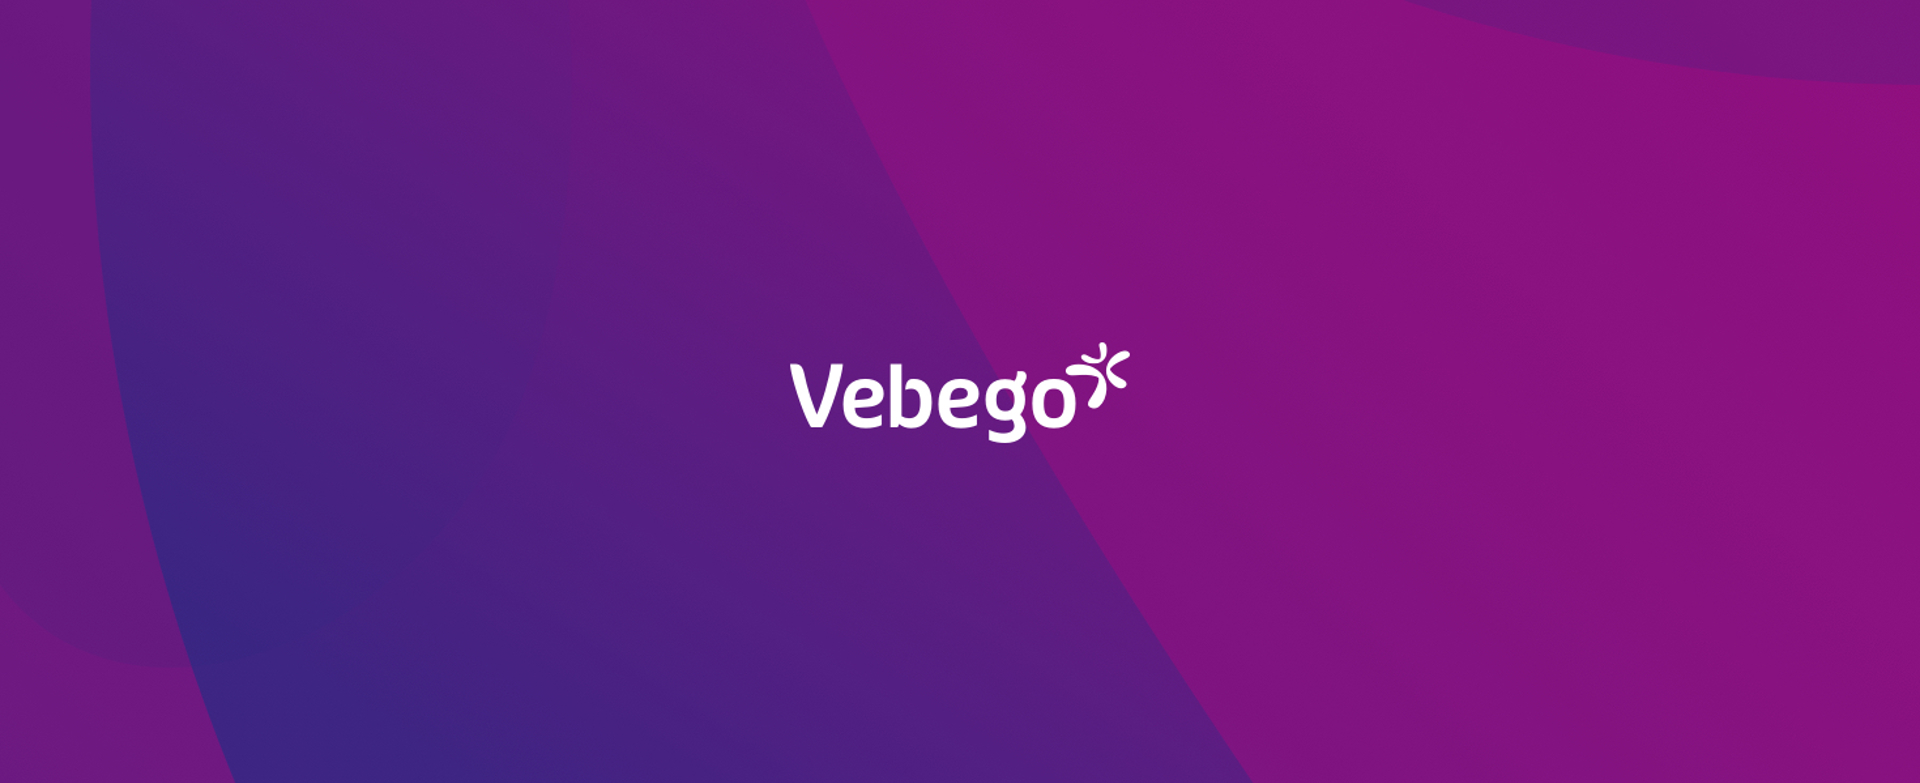 Article Vebego Identity (1)